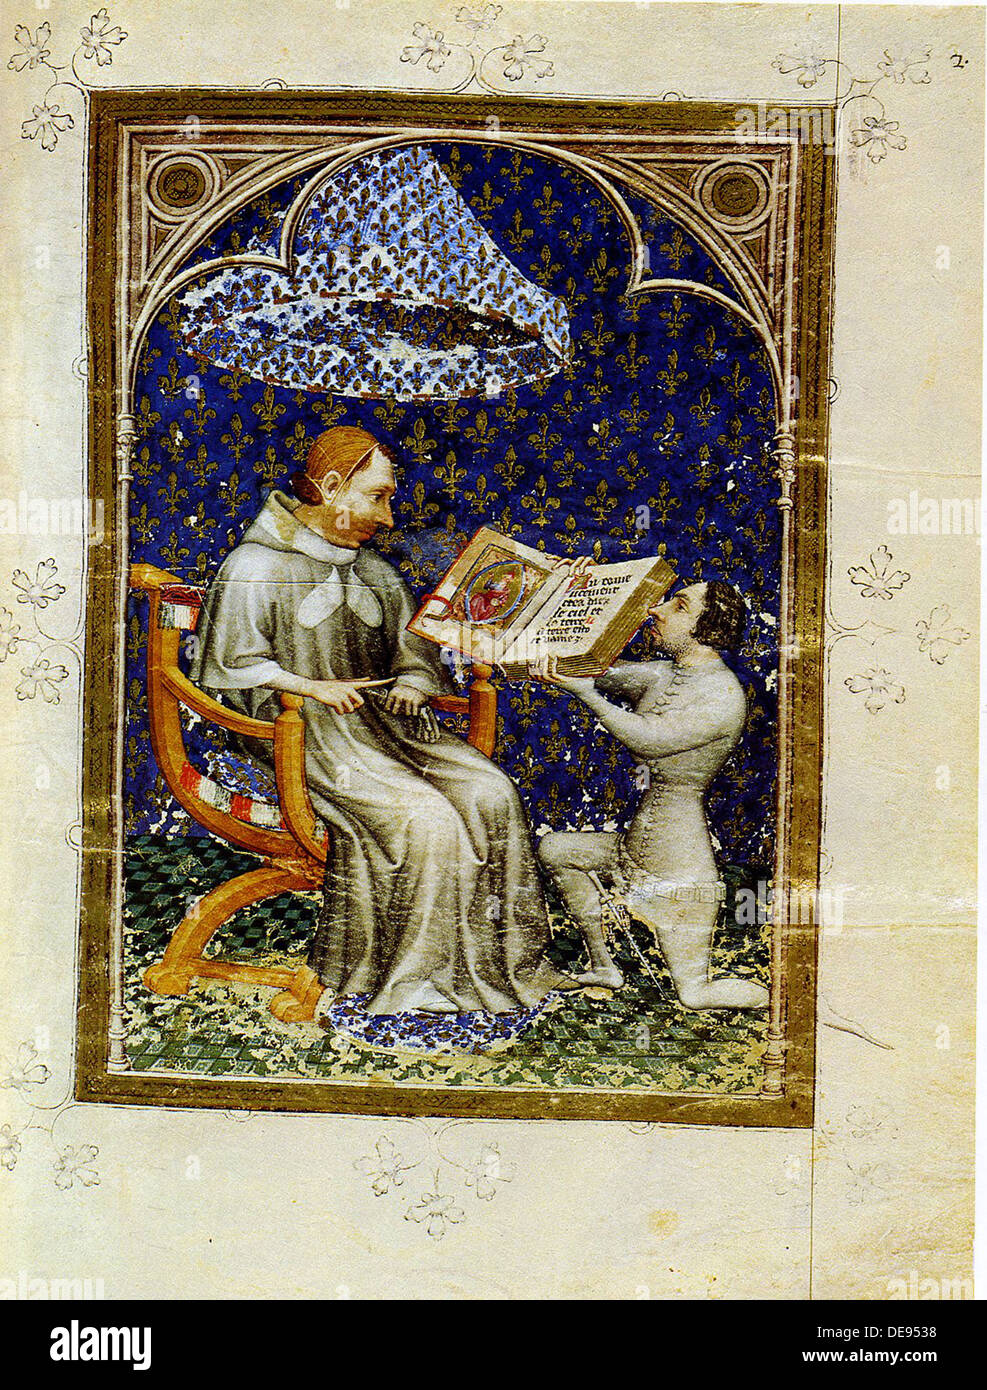 Jean de Vaudetar presents his gift of a book to Charles V of France. (From the Bible historiale of Jean de Vaudetar), 1372. Artist: Bondol, Jan (activ Stock Photo